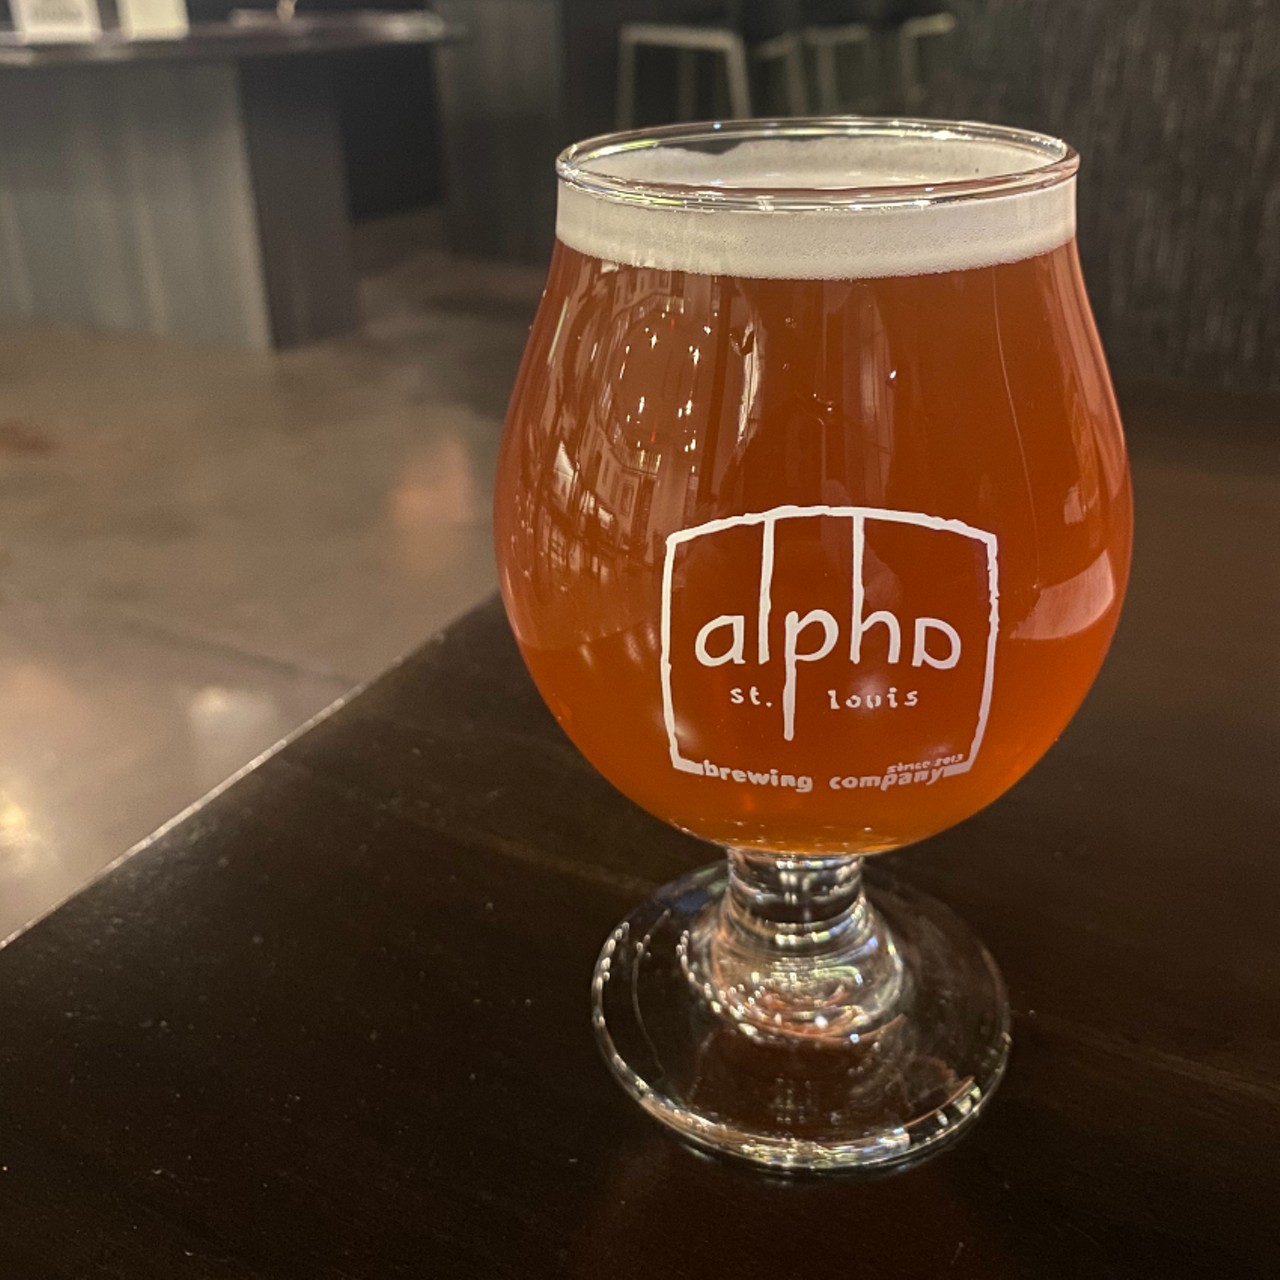 Alpha Brewing Company
(4310 Fyler Avenue, 314-621-2337)
Photo credit: Jonah Munzer / @j_sped on Instagram